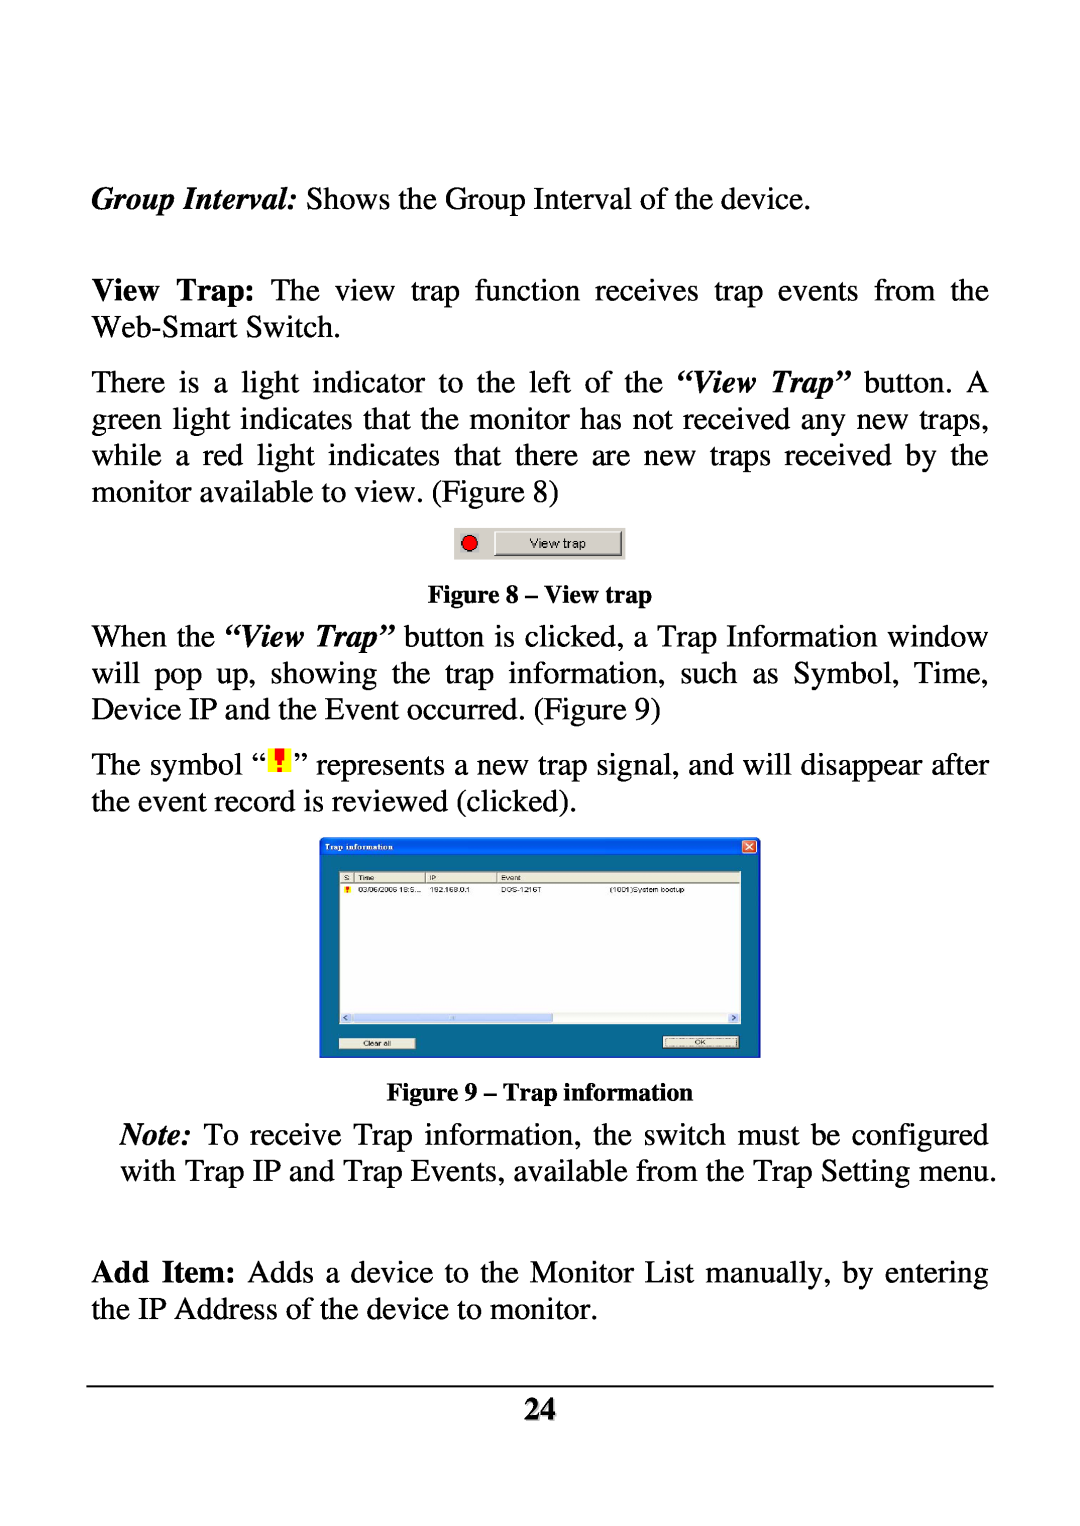 D-Link DES-1252 user manual View trap, Trap information 